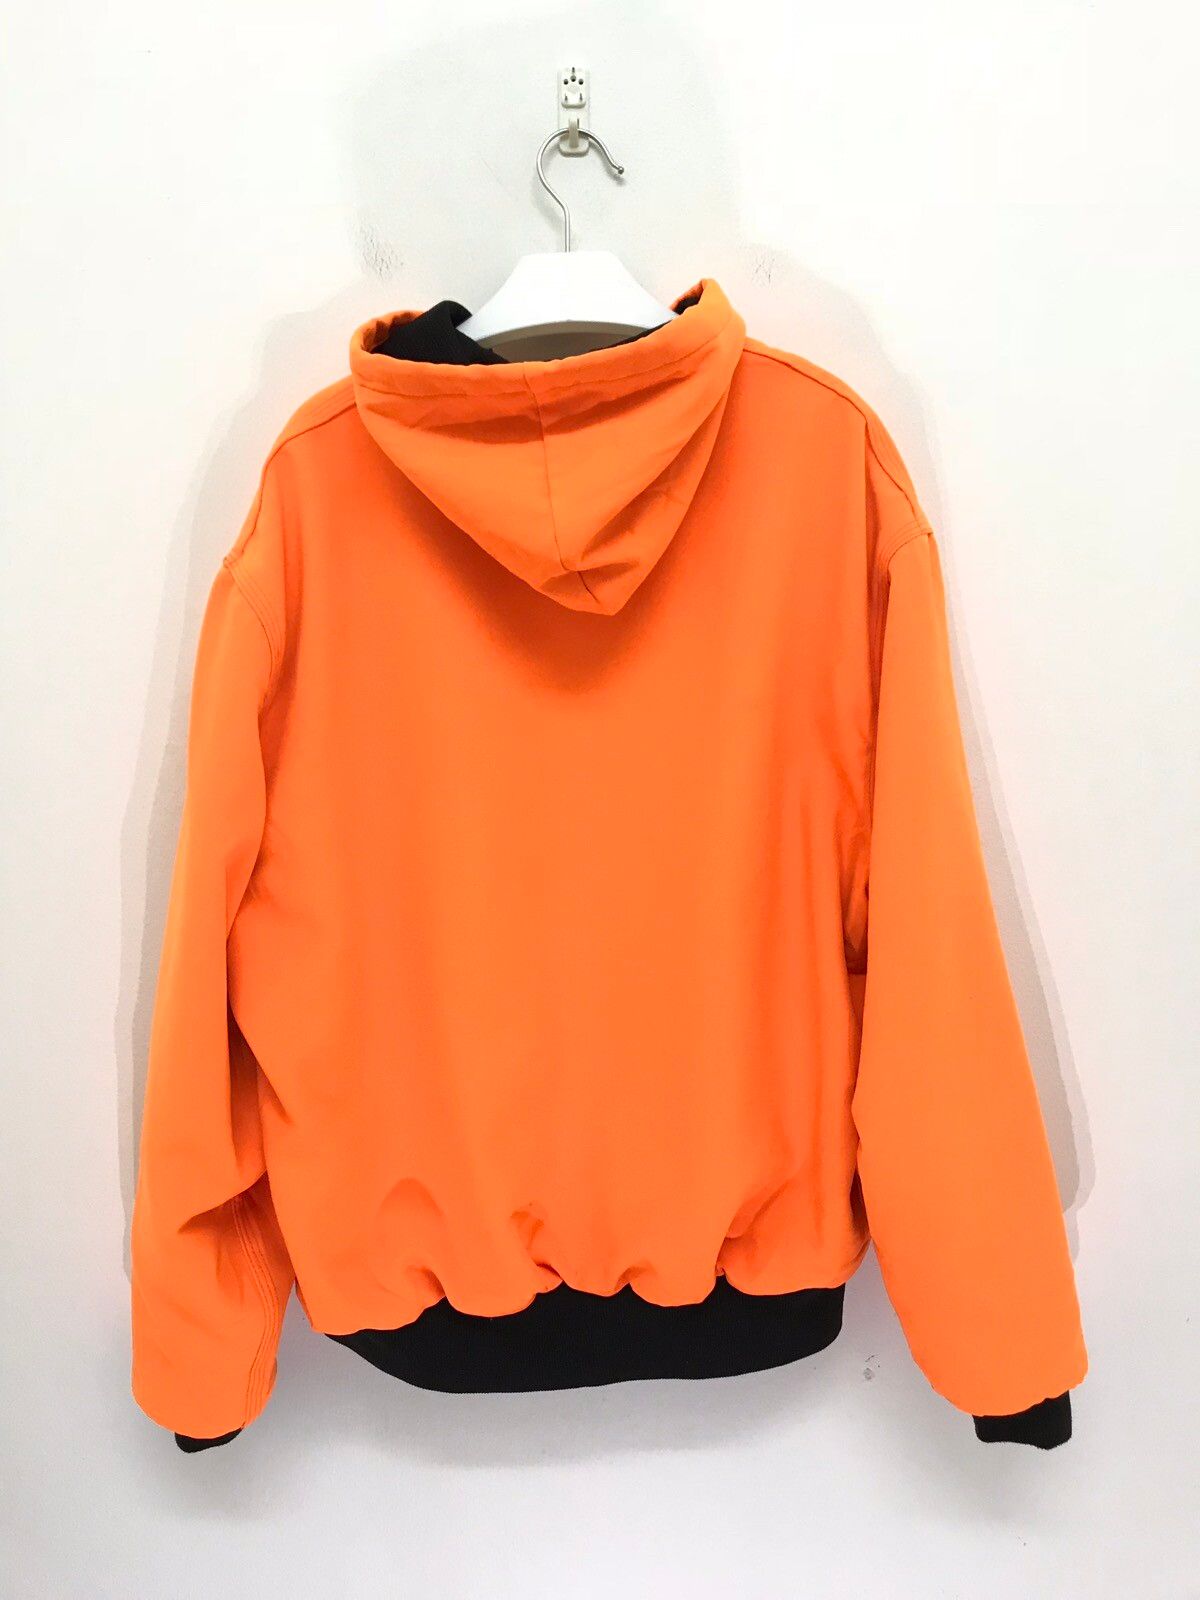 Carhartt Made in USA Carhartt Jacket Neon Orange Very Bright Colour Size US XL / EU 56 / 4 - 4 Thumbnail